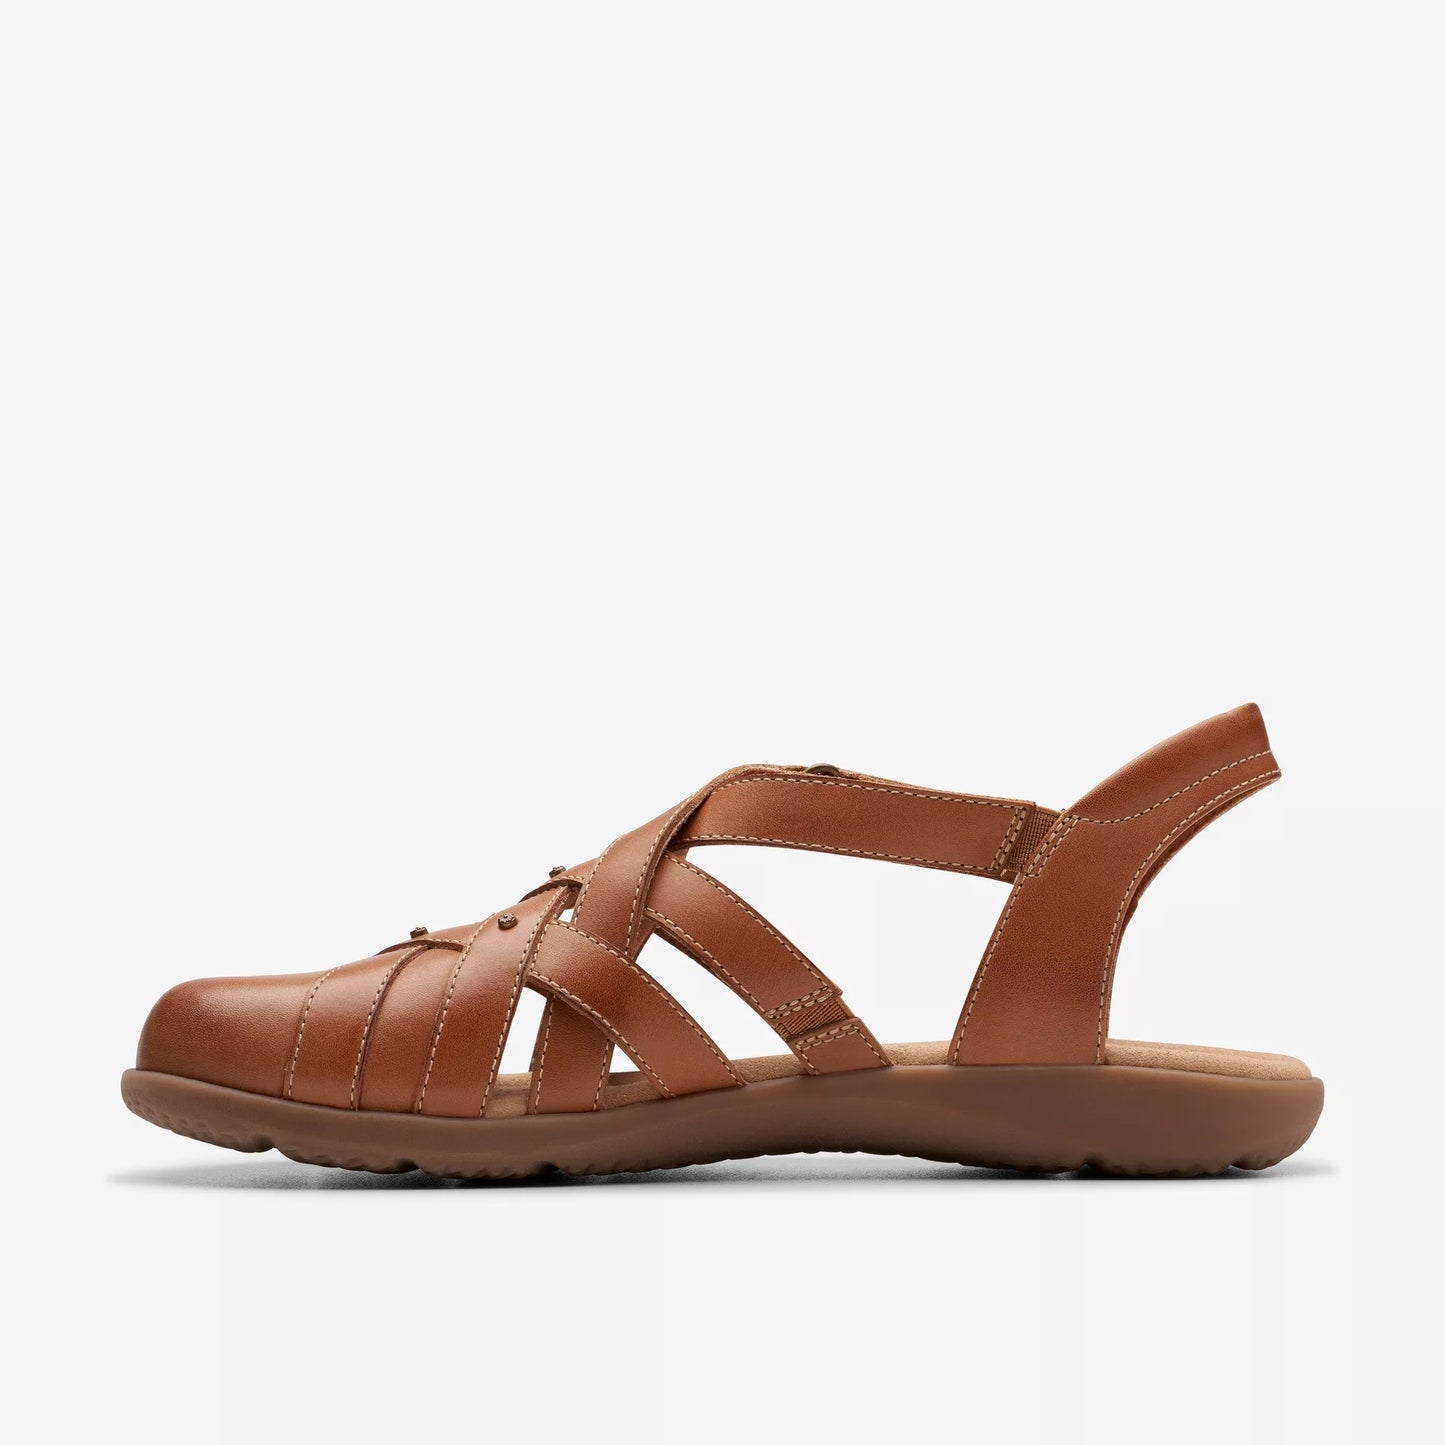 Clarks Women's Elizabelle Sea Sandals - Tan Leather